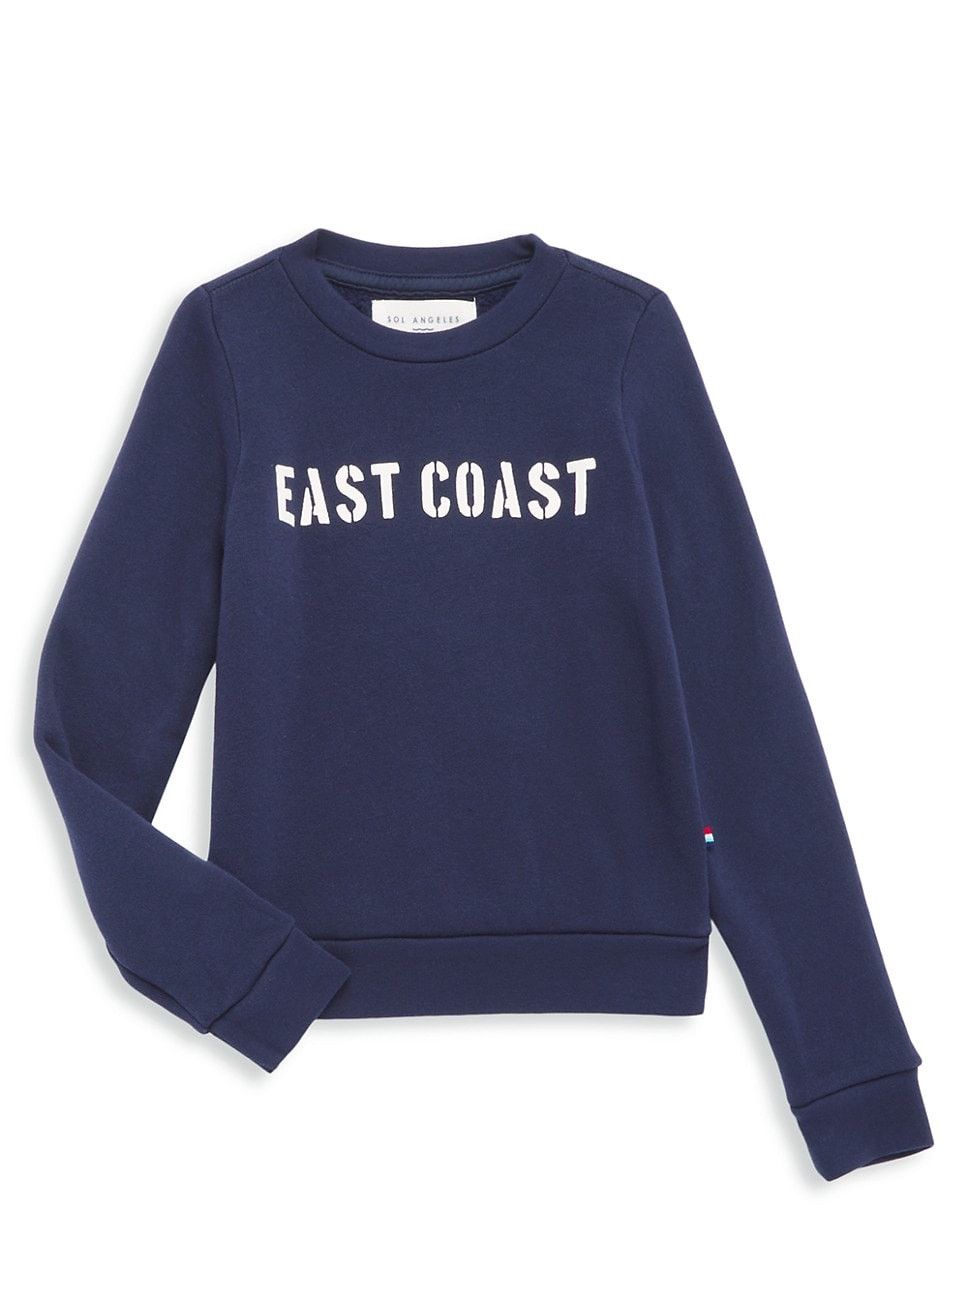 Little Kid's & Kid's East Coast Graphic Shirt | Saks Fifth Avenue